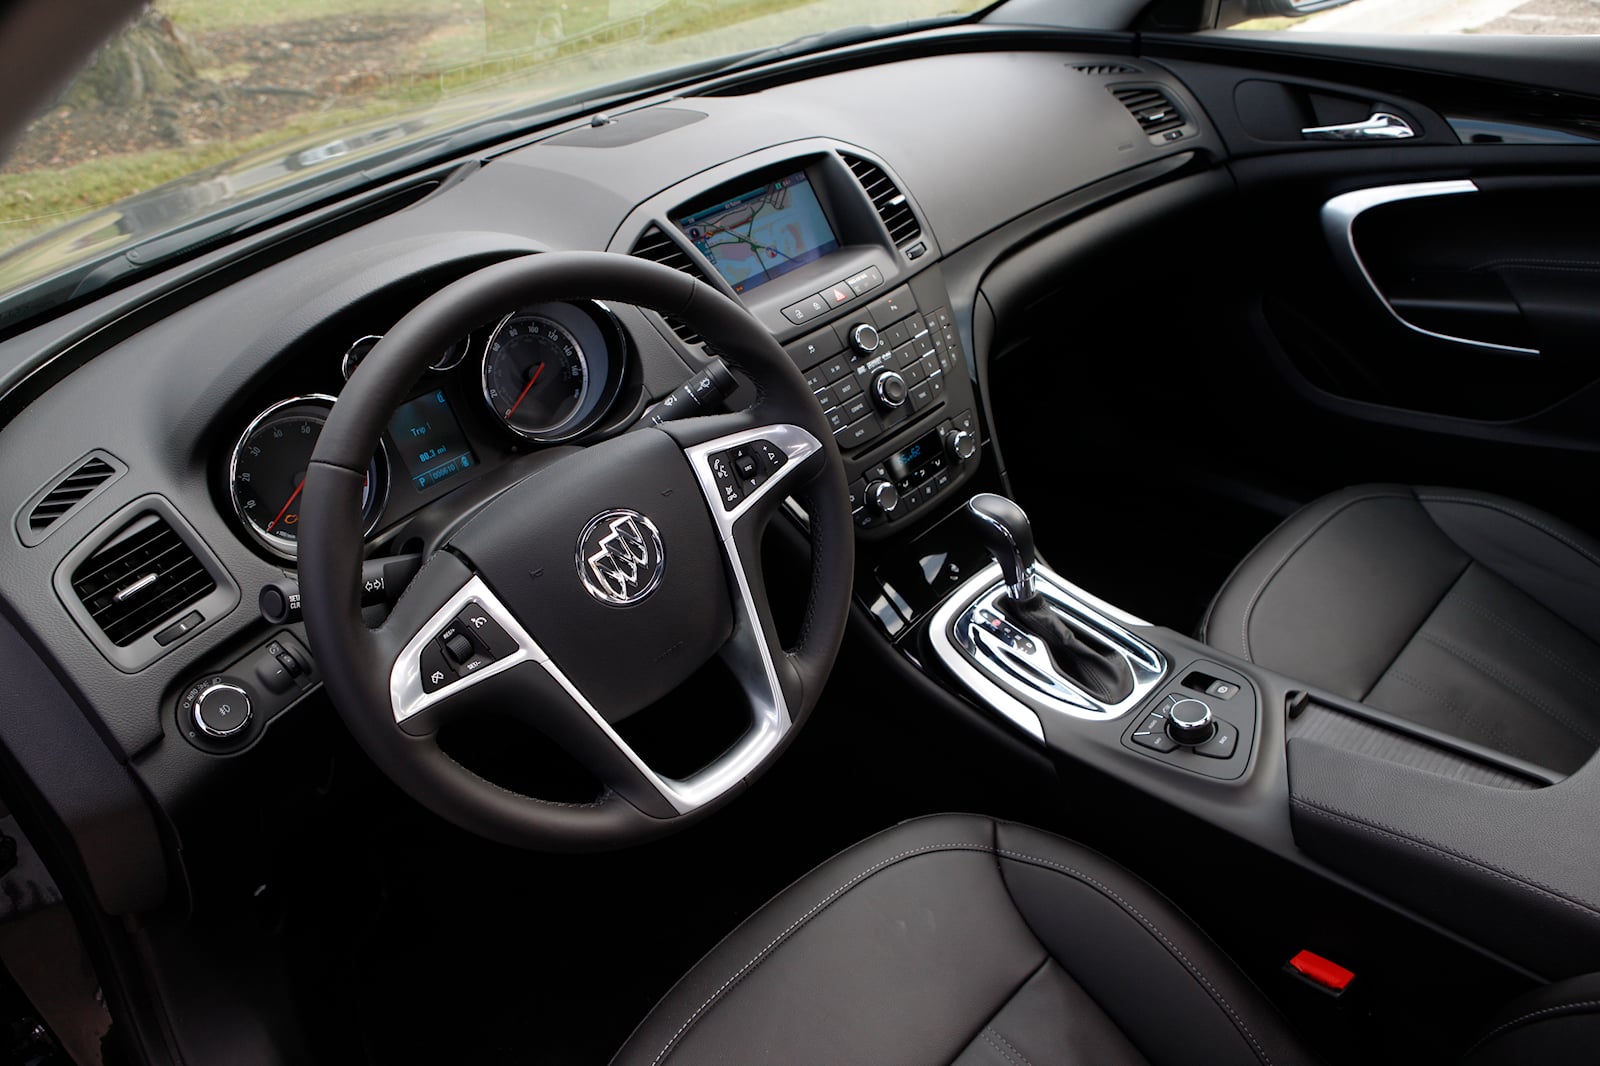 2011 Buick Regal CXL Turbo Ready for Any Road - autoevolution